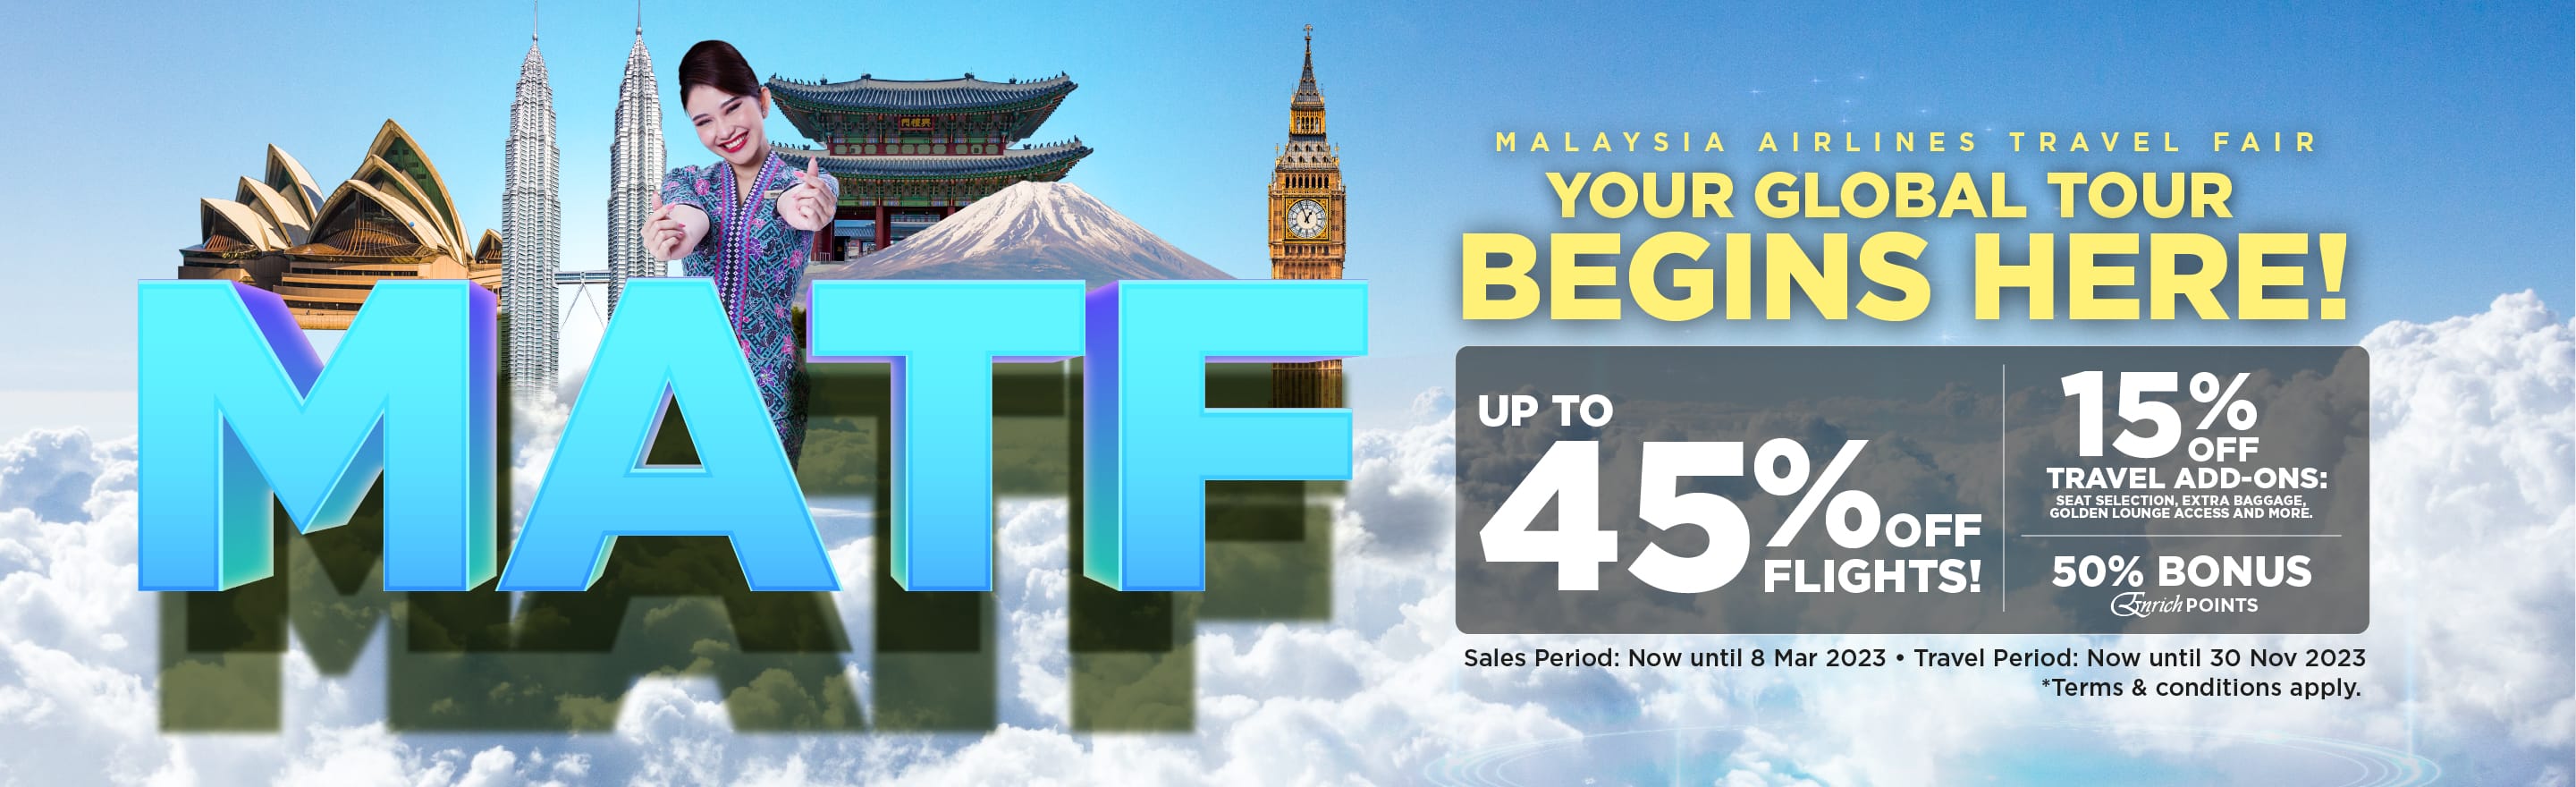 Malaysia Airlines Travel Fair: International matf 2023 international